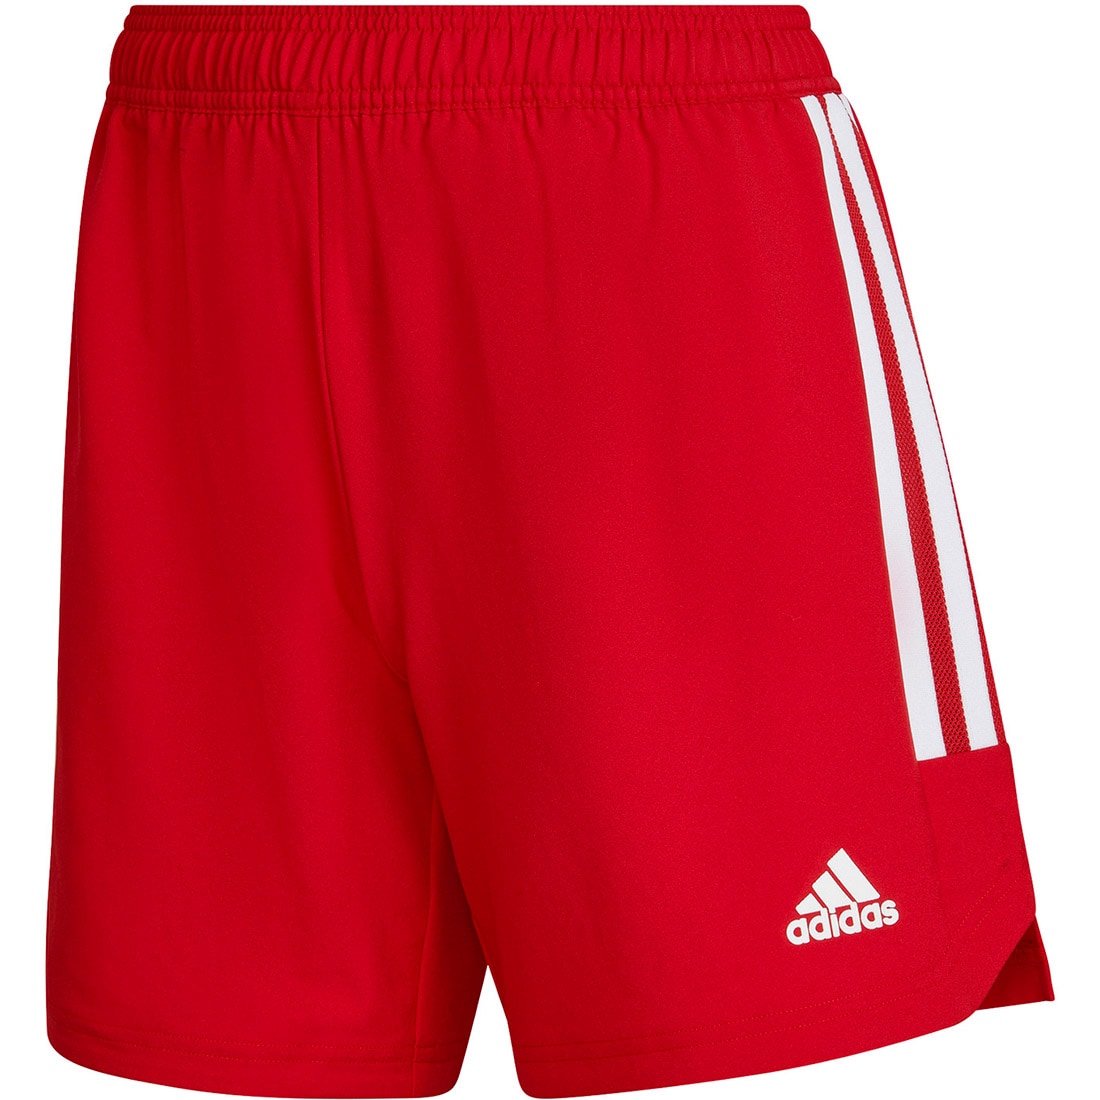 Adidas Damen MD Shorts Condivo 22 rot-weiß